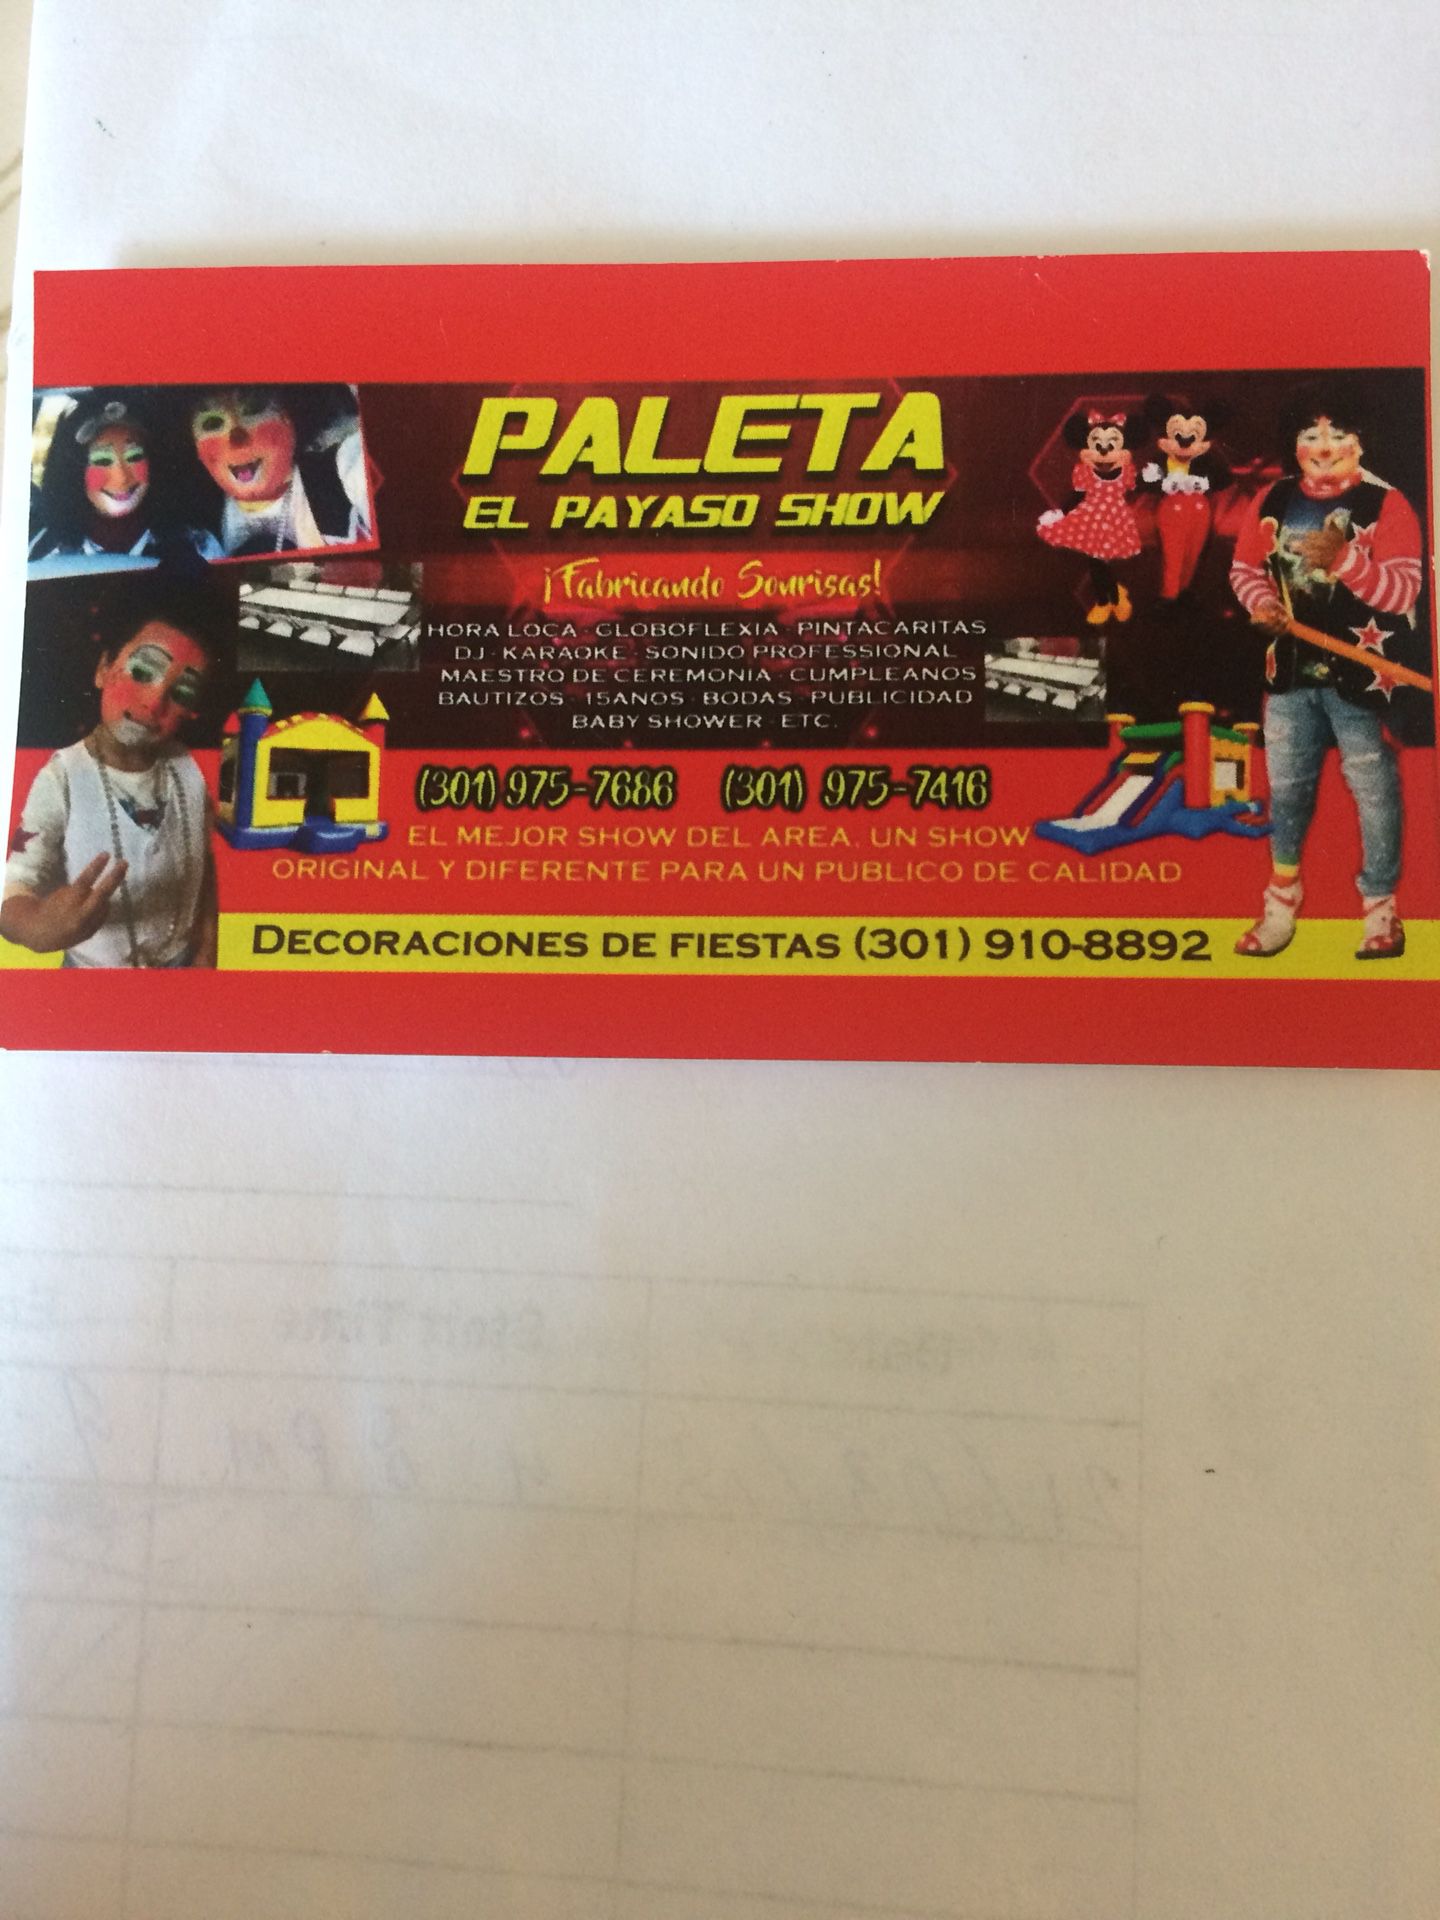 El payaso paleta show